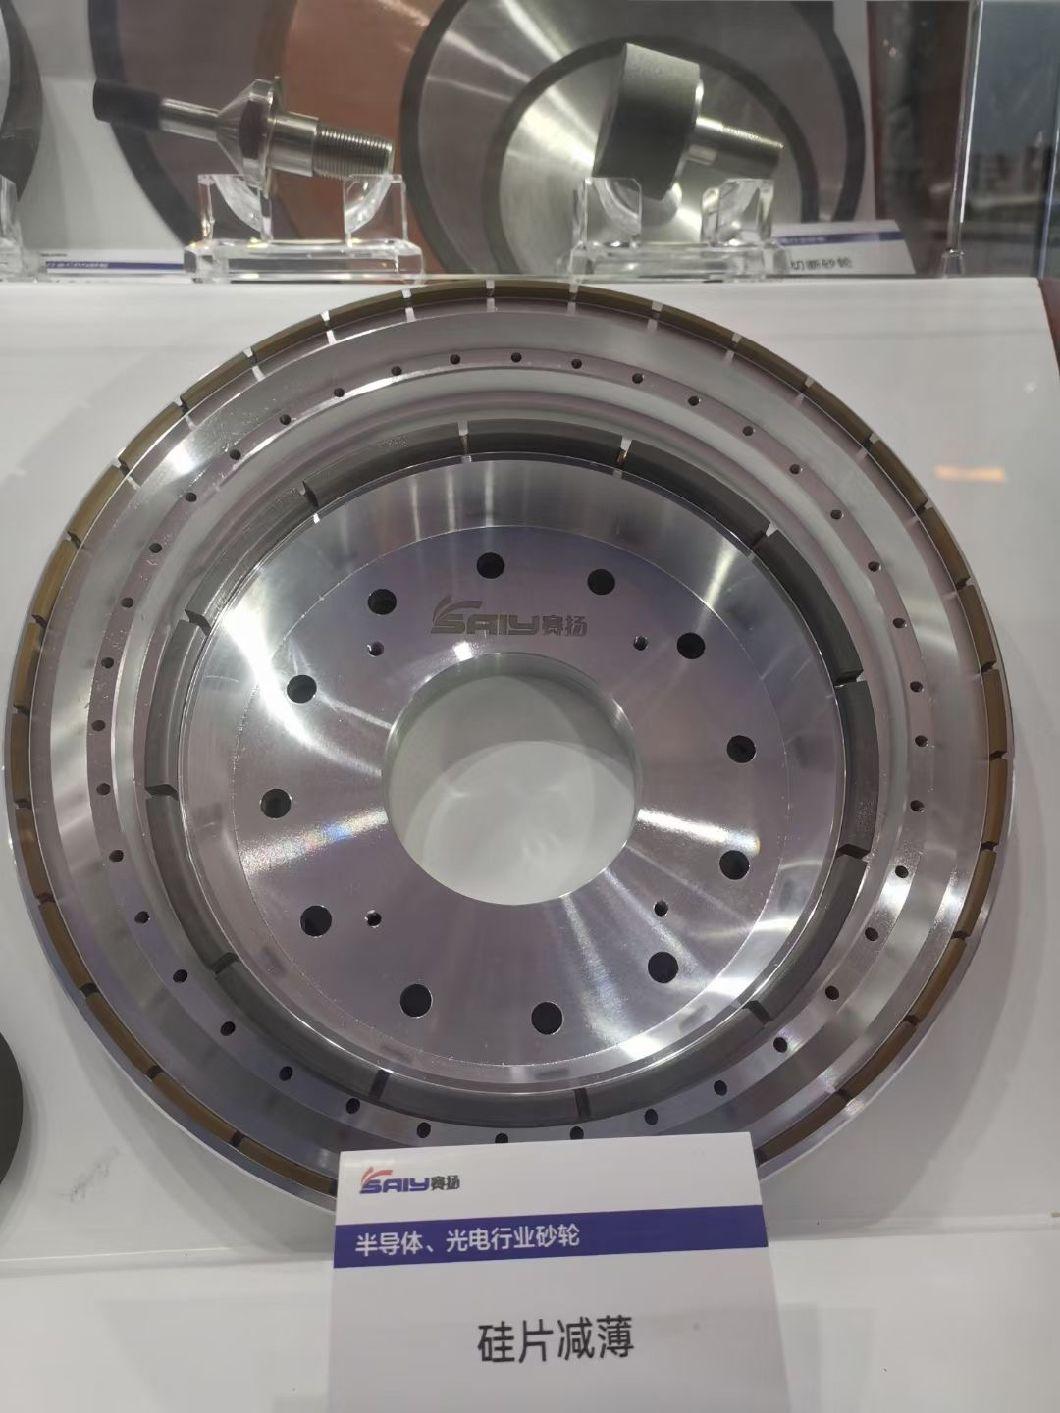 Diamond Grinding Wheels, CBN Superabrasives Tools